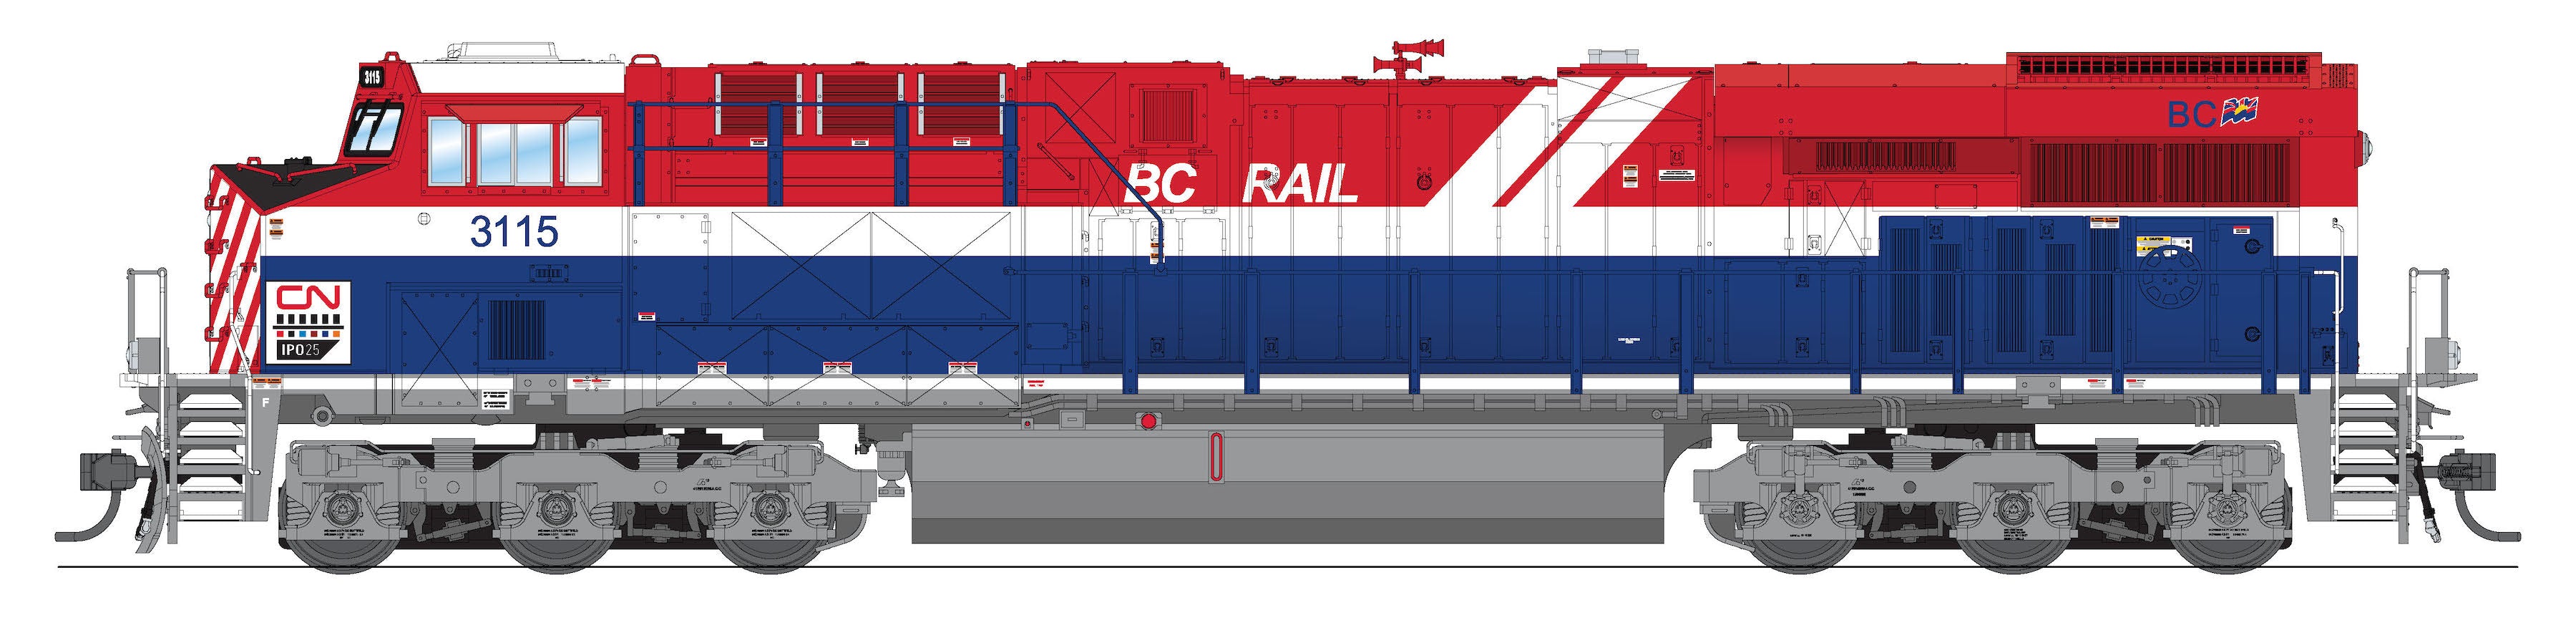 8555 GE ES44AC, CN #3115, BC Rail Heritage Paint, No-Sound / DCC-Ready, HO